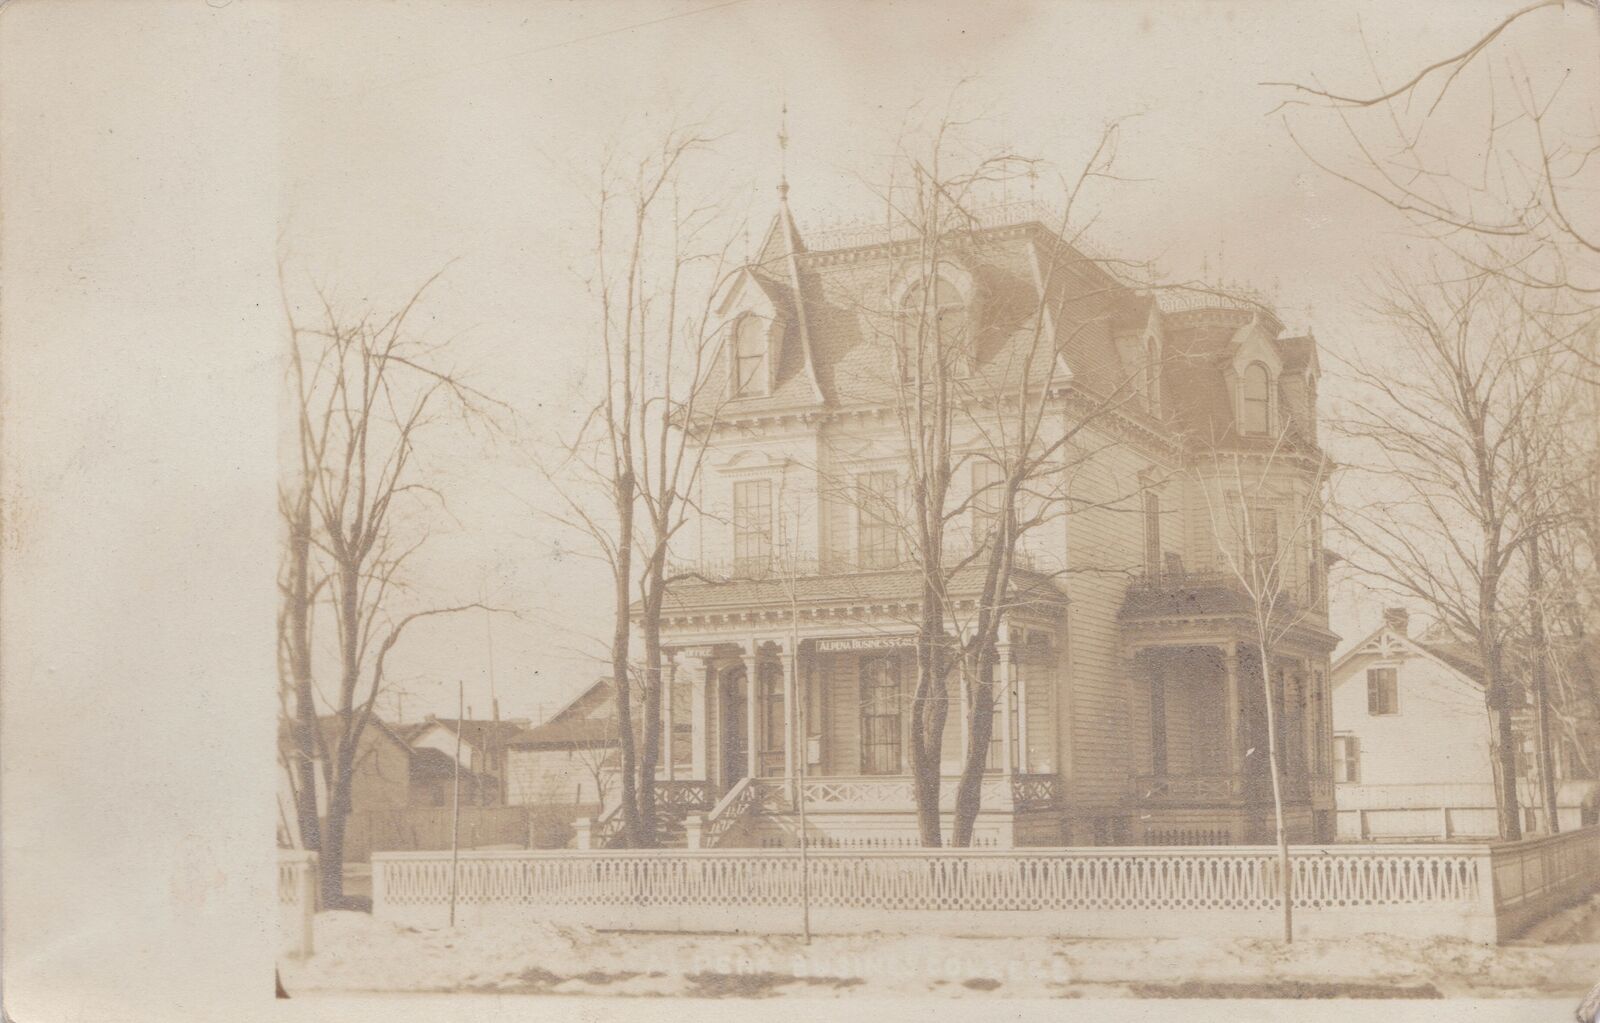 NE Alpena MI RPPC c.1906 THE ALPENA BUSINESS COLLEGE located in this Mansion